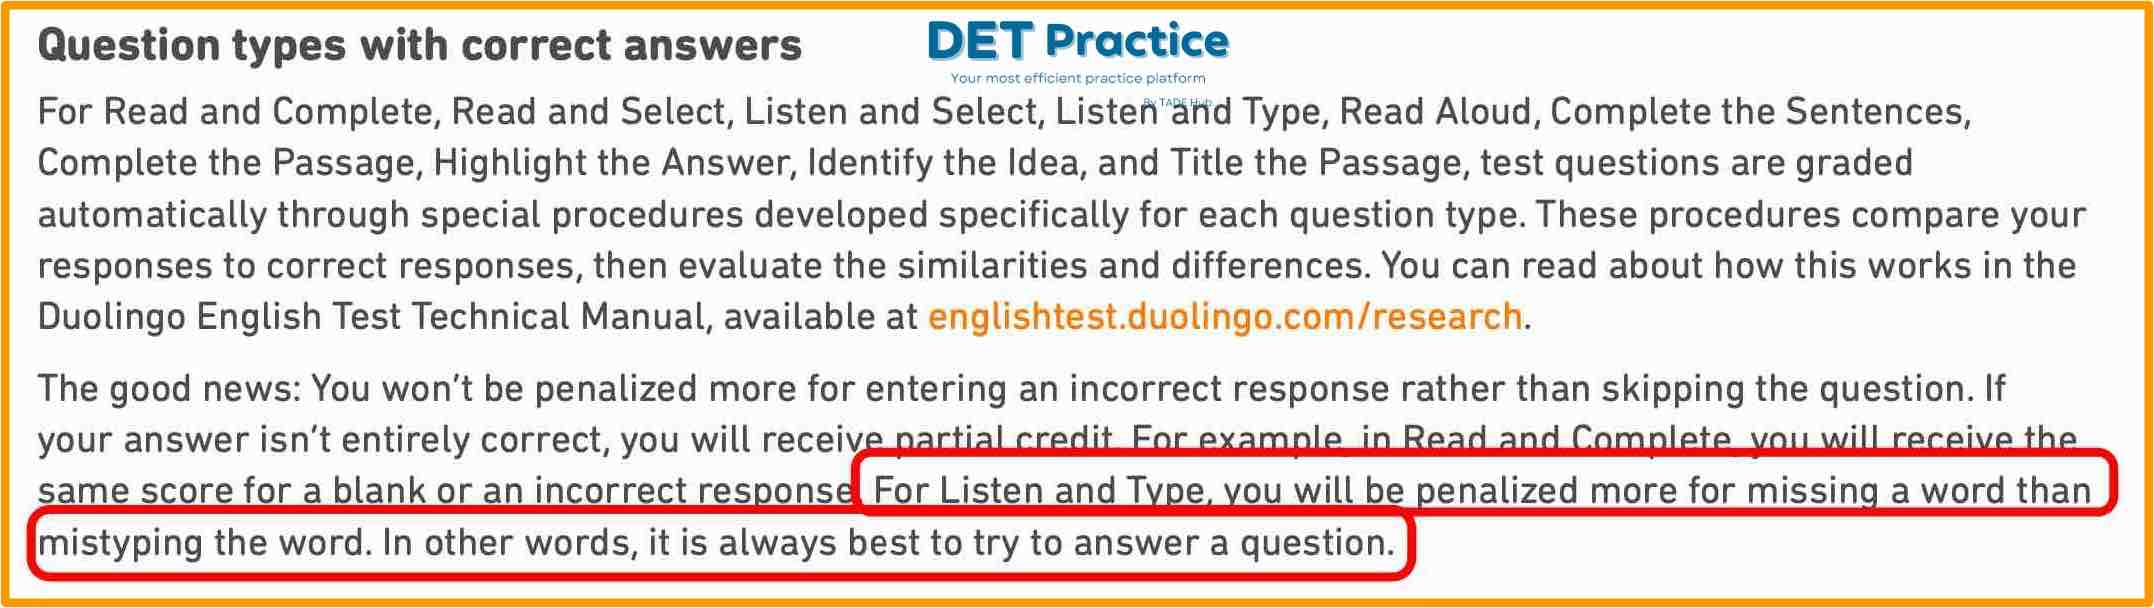 listen-and-type-duolingo-scores explain, det practice platform, Duolingo Test preparation, listening skills, listen and type